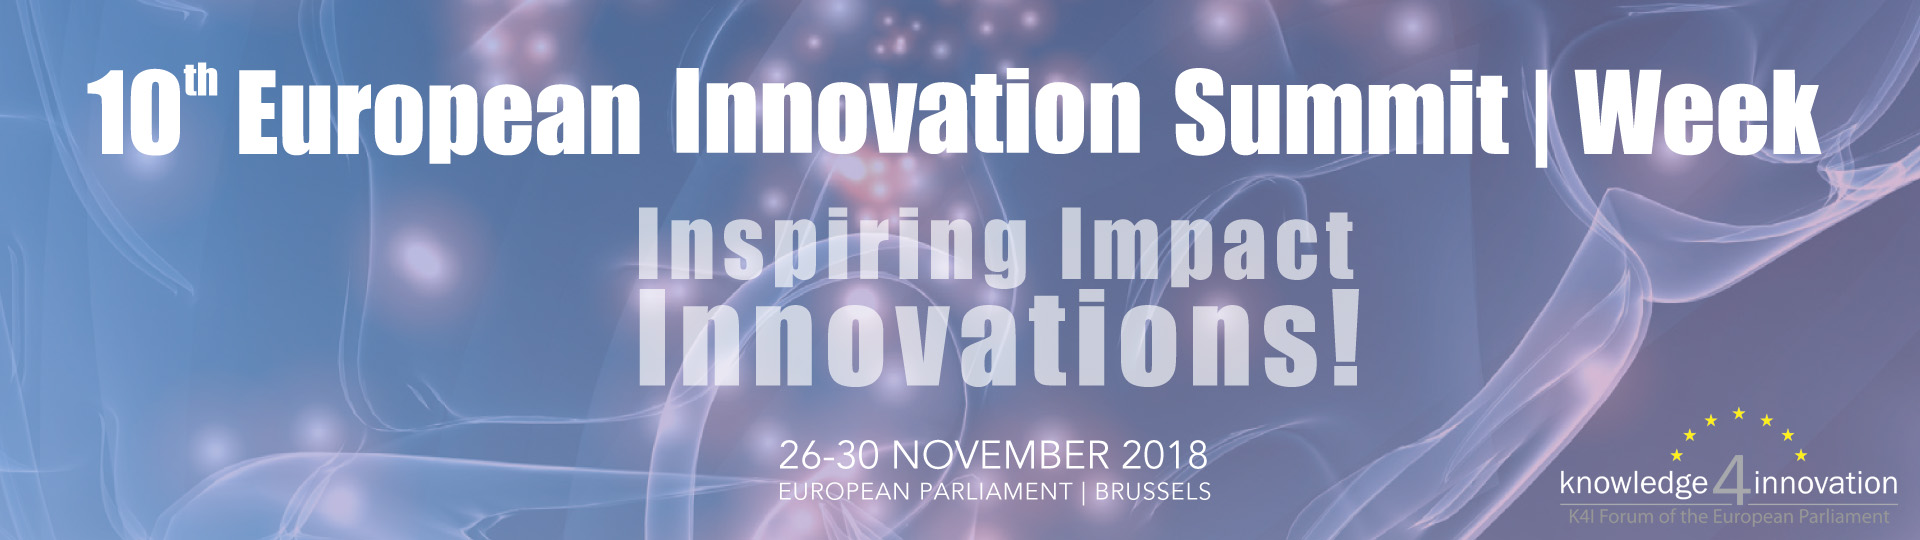 10th European Innovation Summit @ Brussels